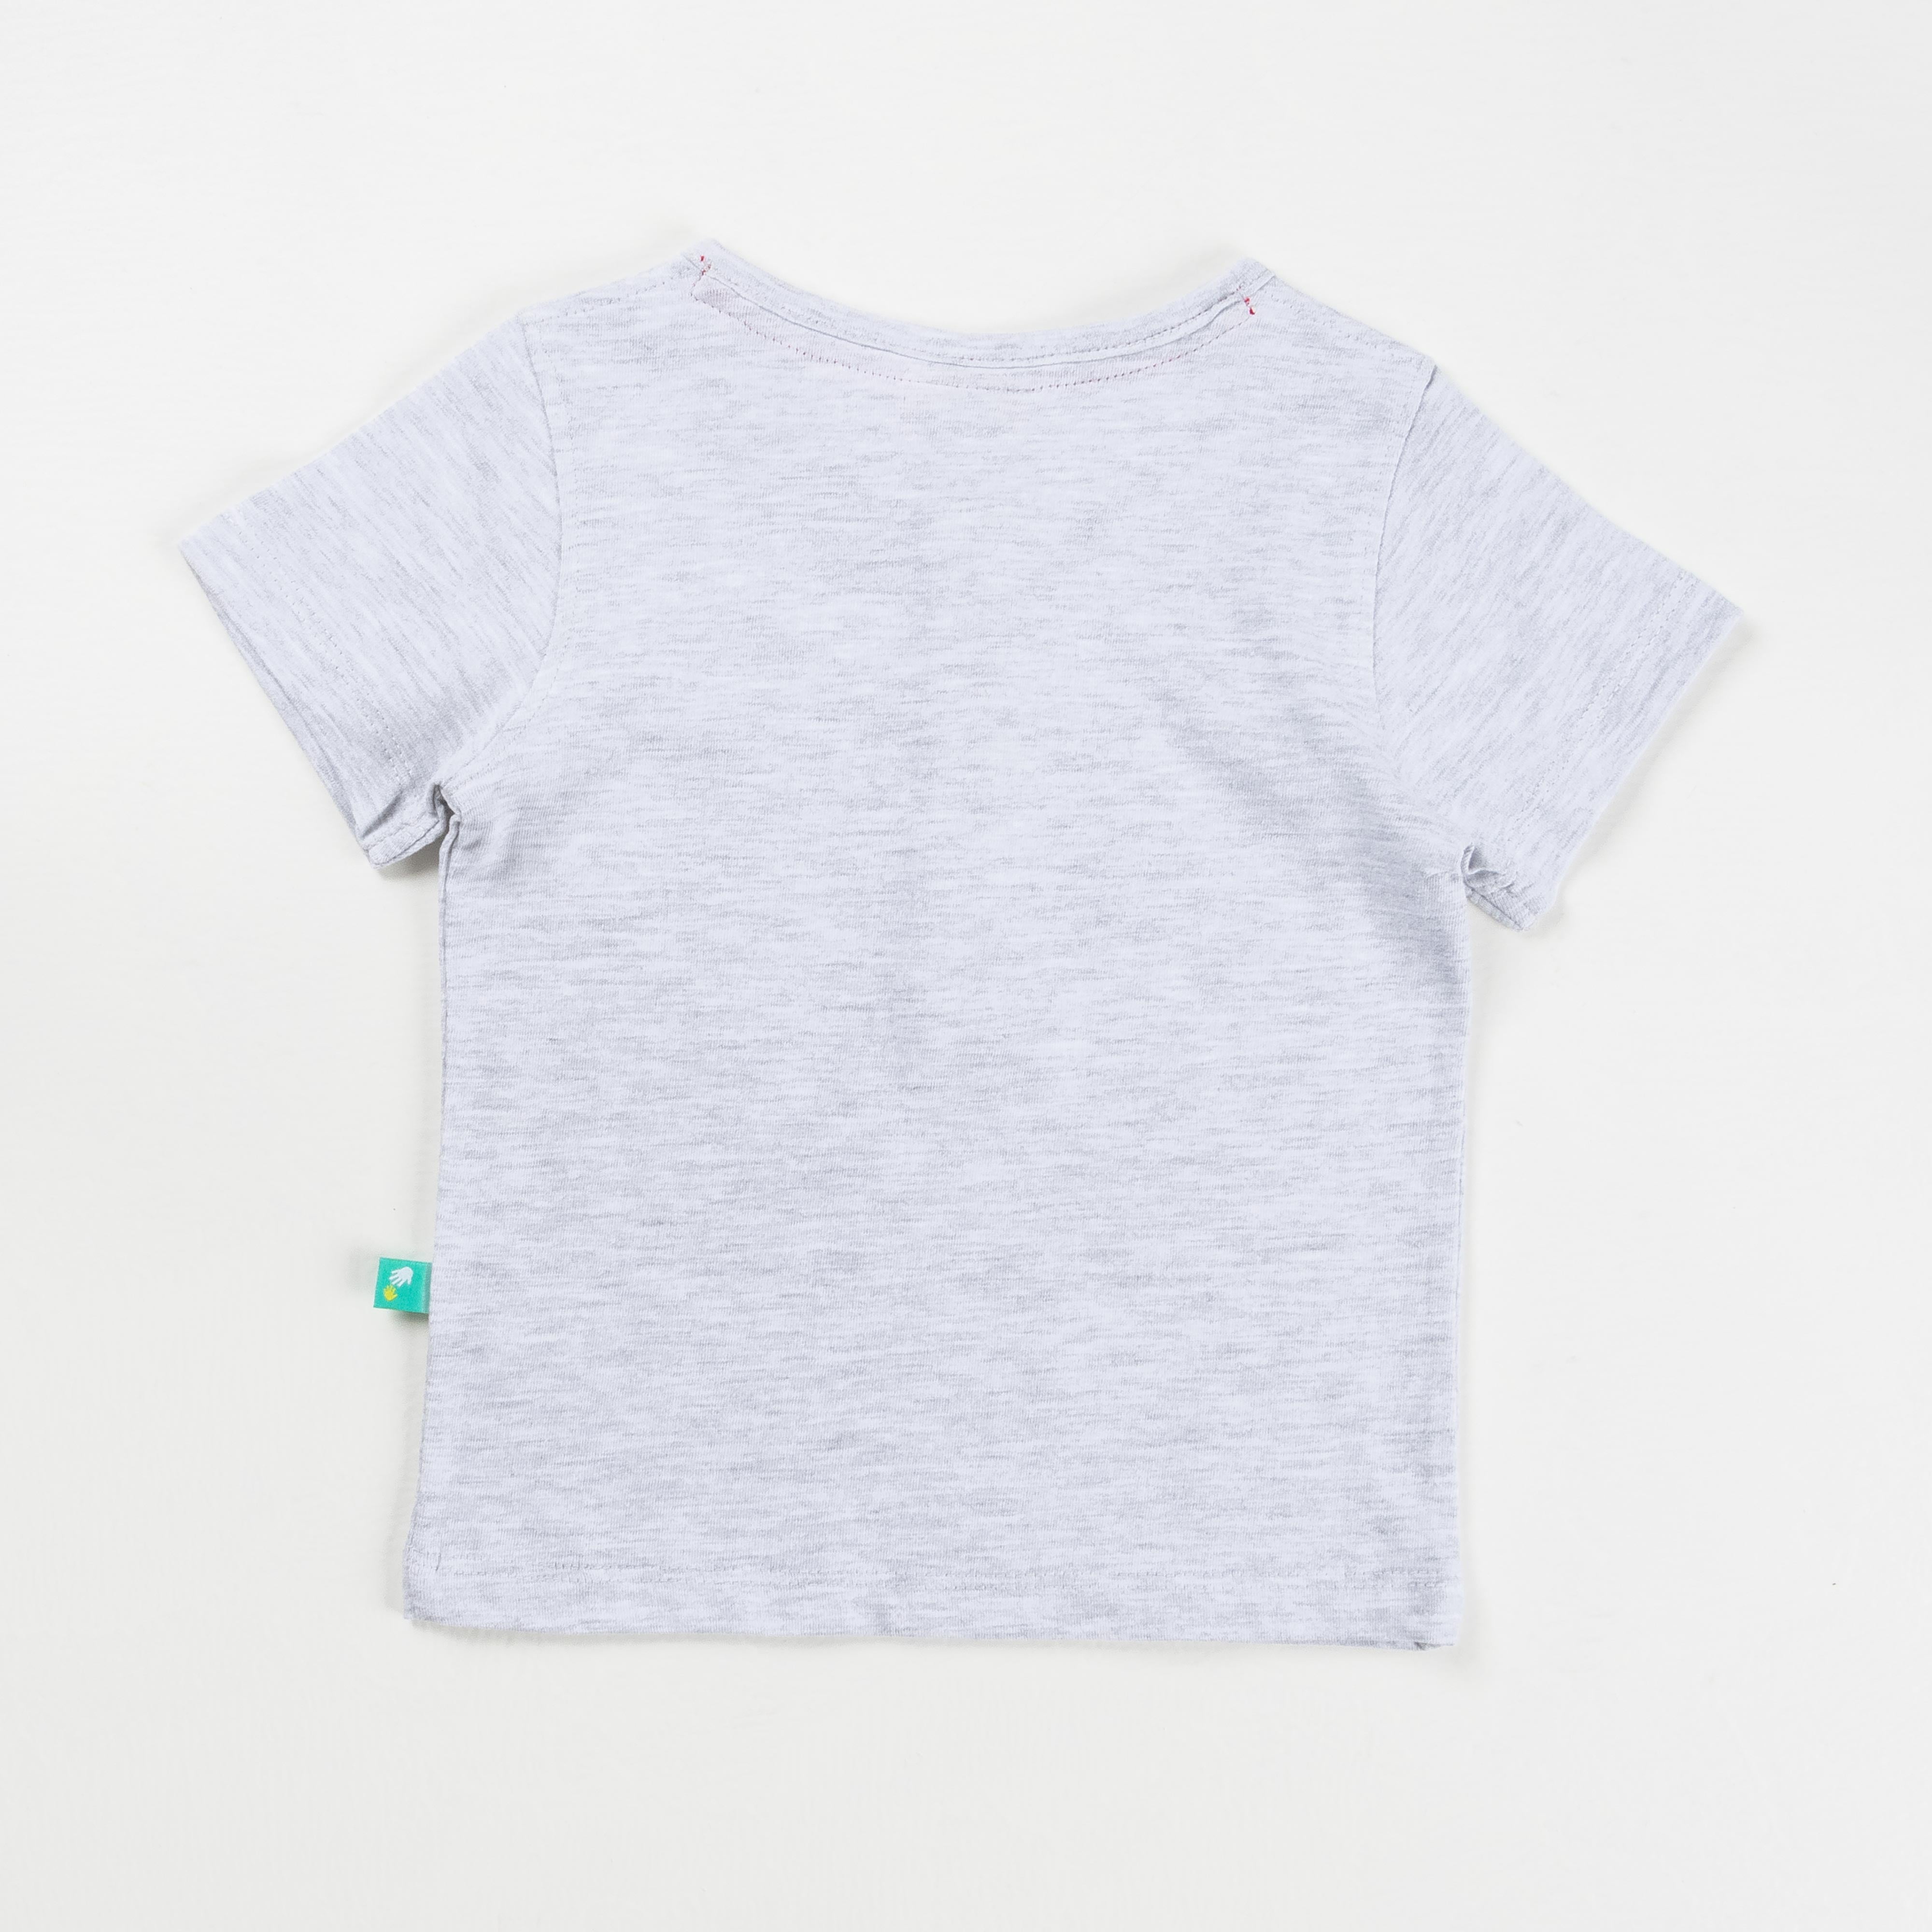 Baby Boys Half Sleeve Graphic Printed T Shirt